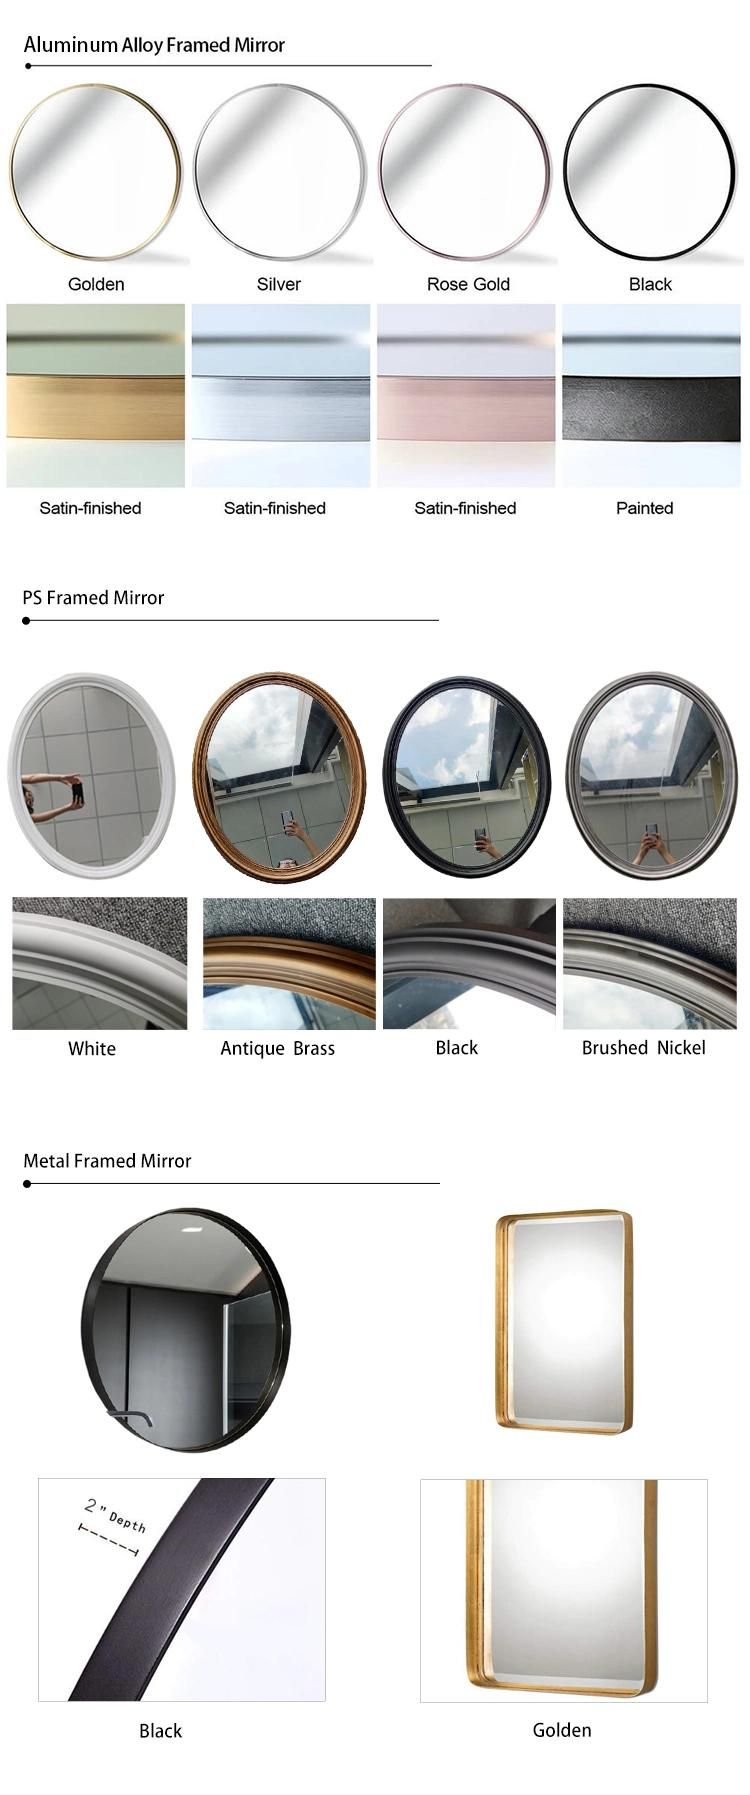 Hot Selling 16 in X 16 in Satin Golden Round Aluminum Alloy Framed Bathroom Vanity Mirror